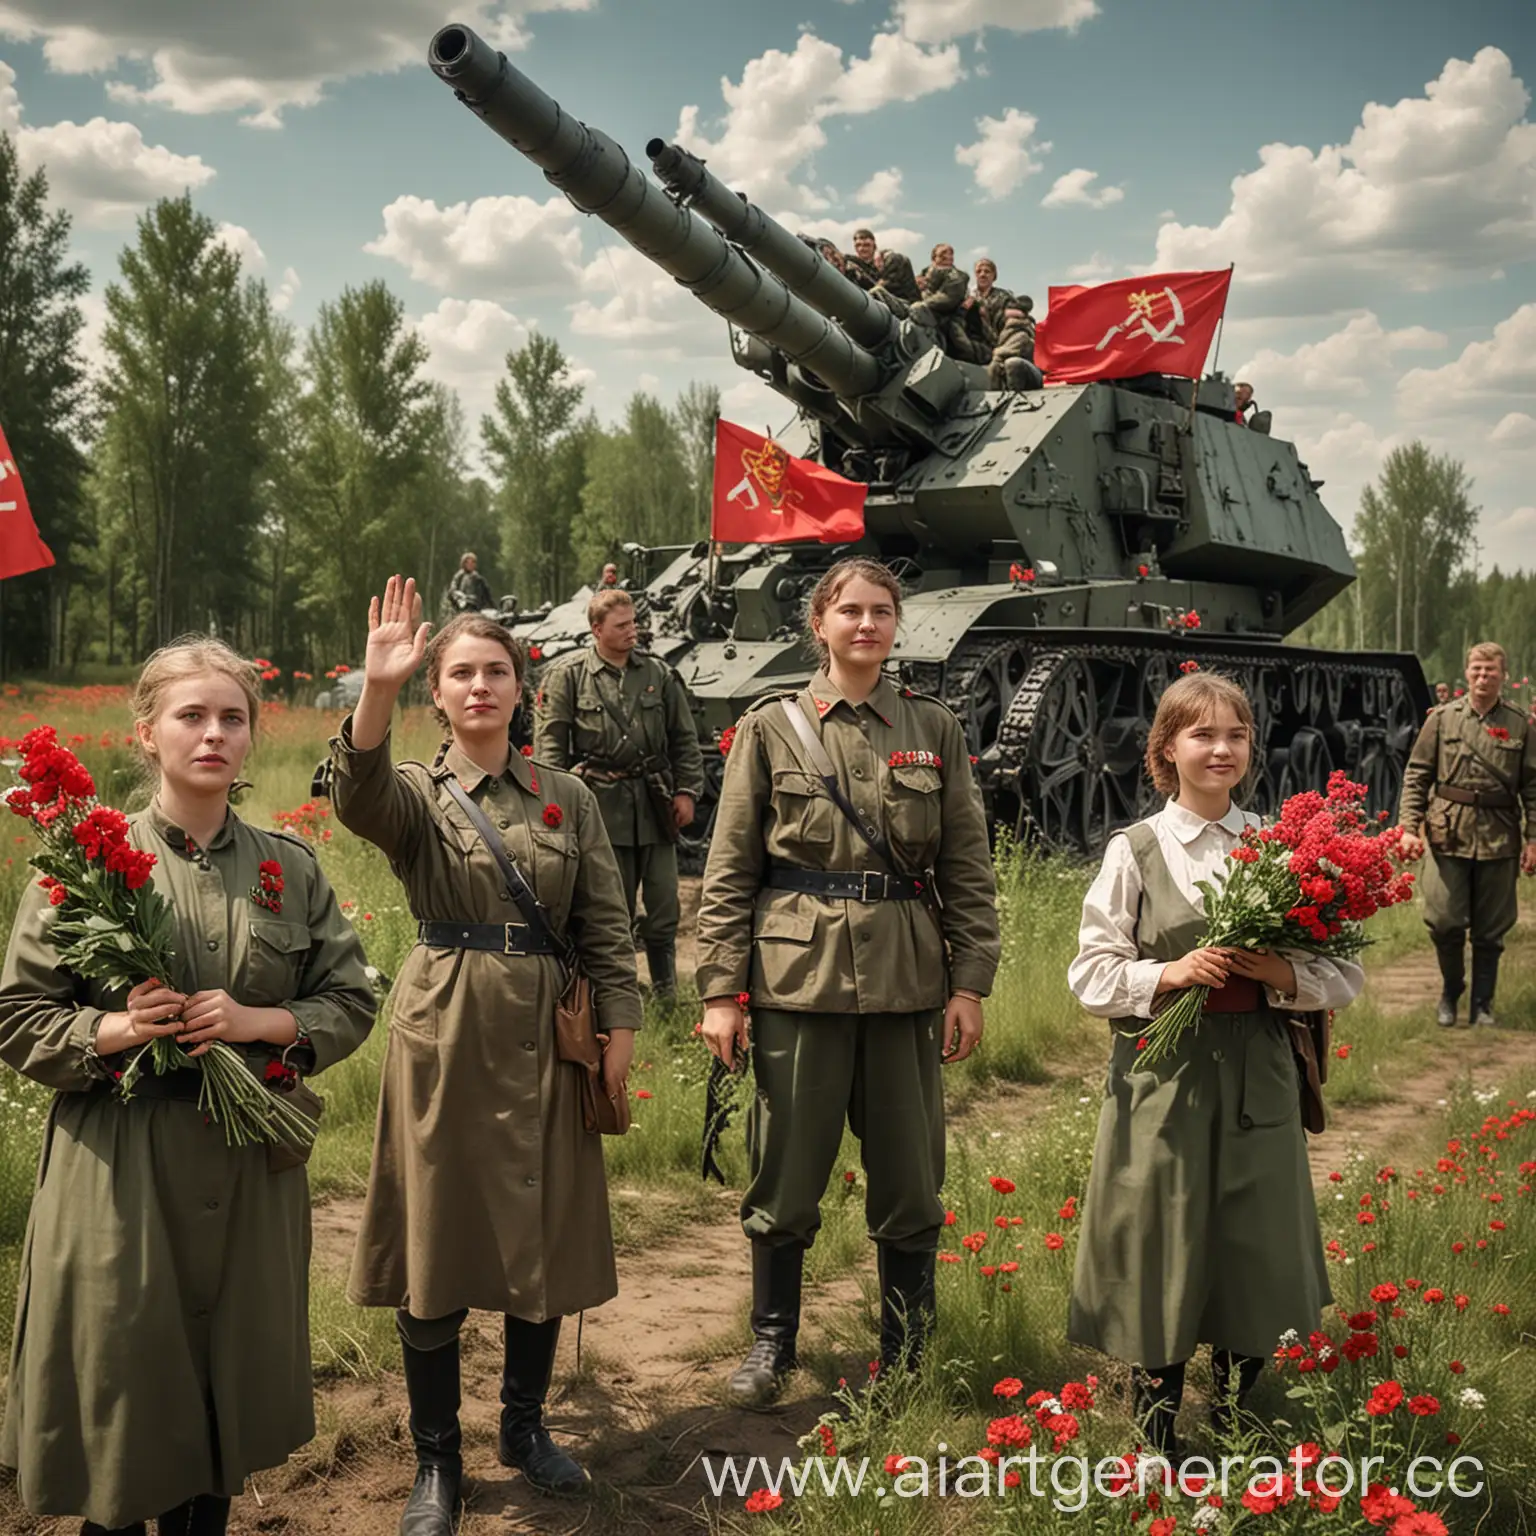 Soviet-Liberation-Celebration-with-Katiusha-Artillery-and-Family-Holding-Flowers